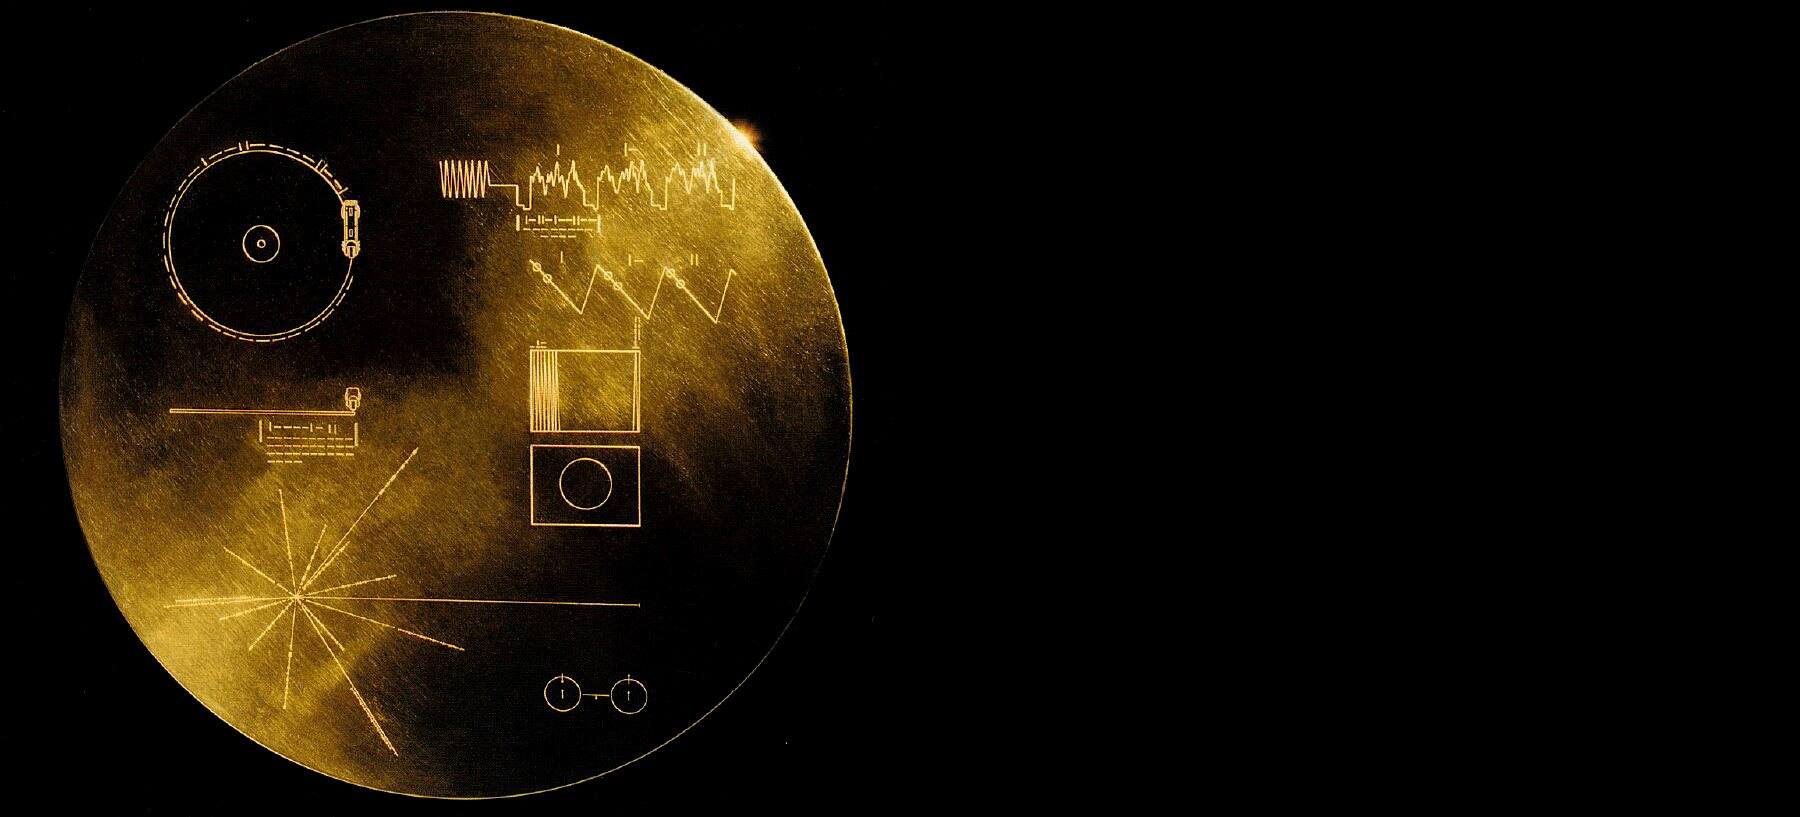 Nasa's Golden Record may baffle alien life, say researchers